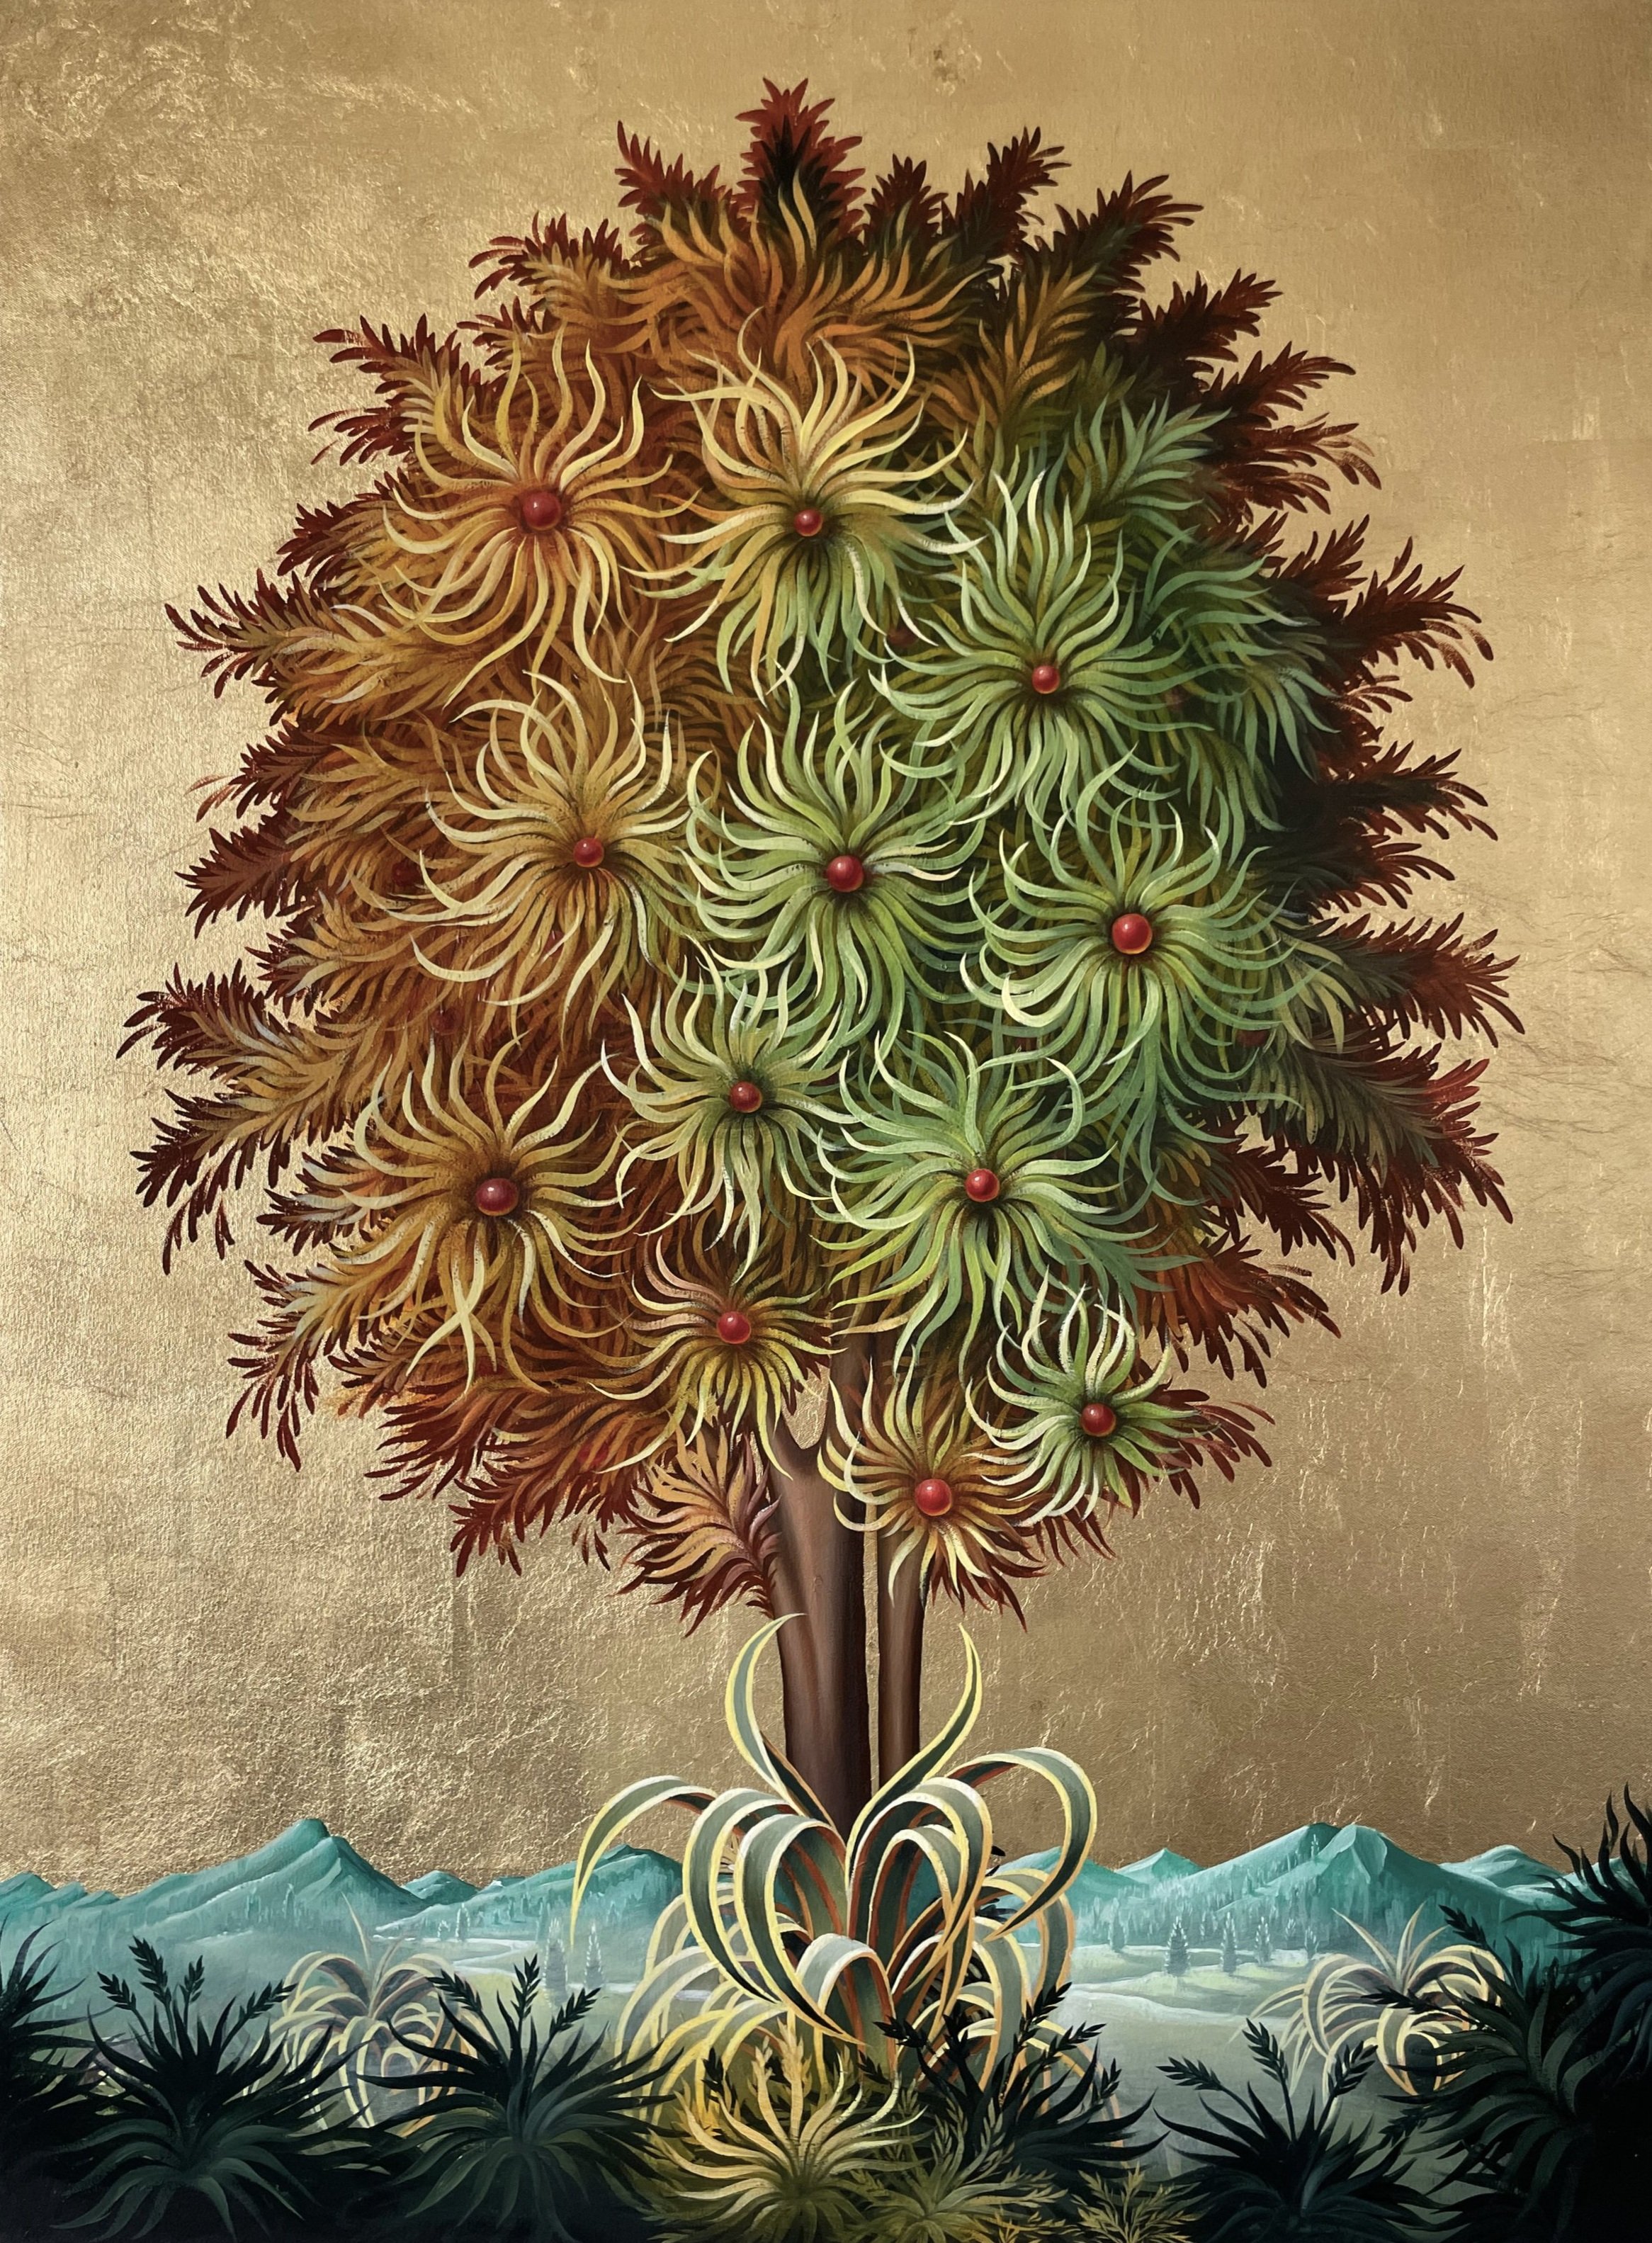  PETER DAVERINGTON   Acacia Tree I  2021 Oil and gold leaf on canvas 122 x 91 cm  